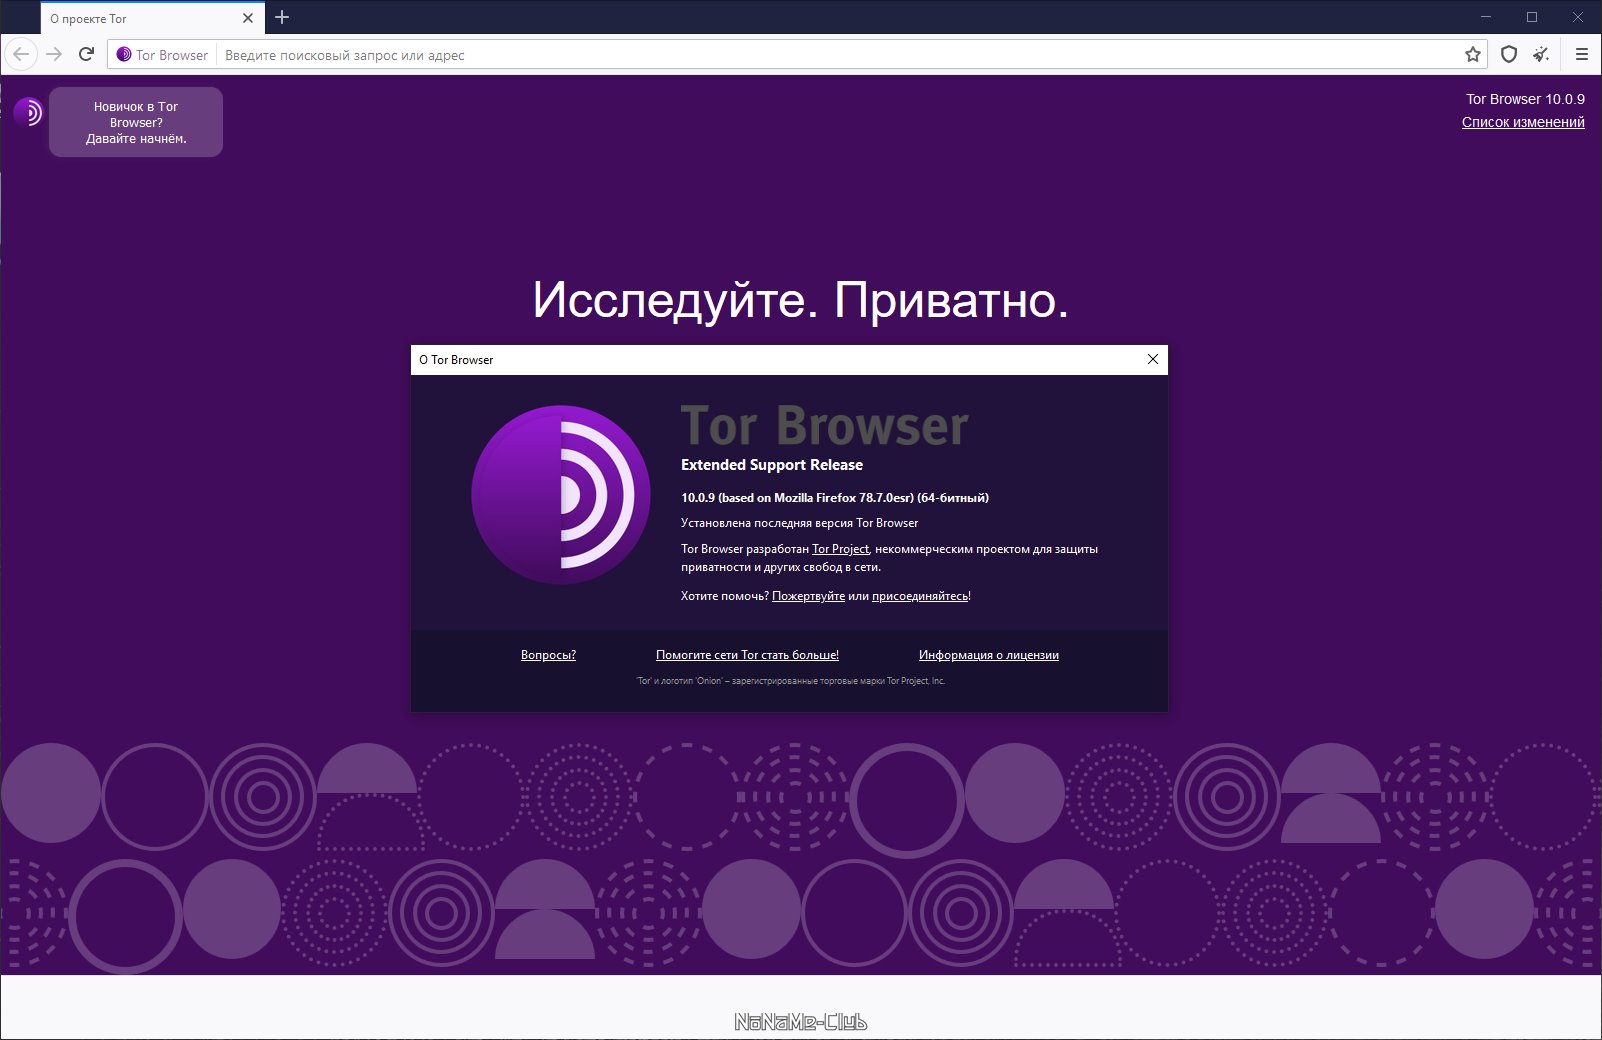 Скачать тор браузер бесплатно для windows 7 даркнет тор браузер русский бесплатно даркнет